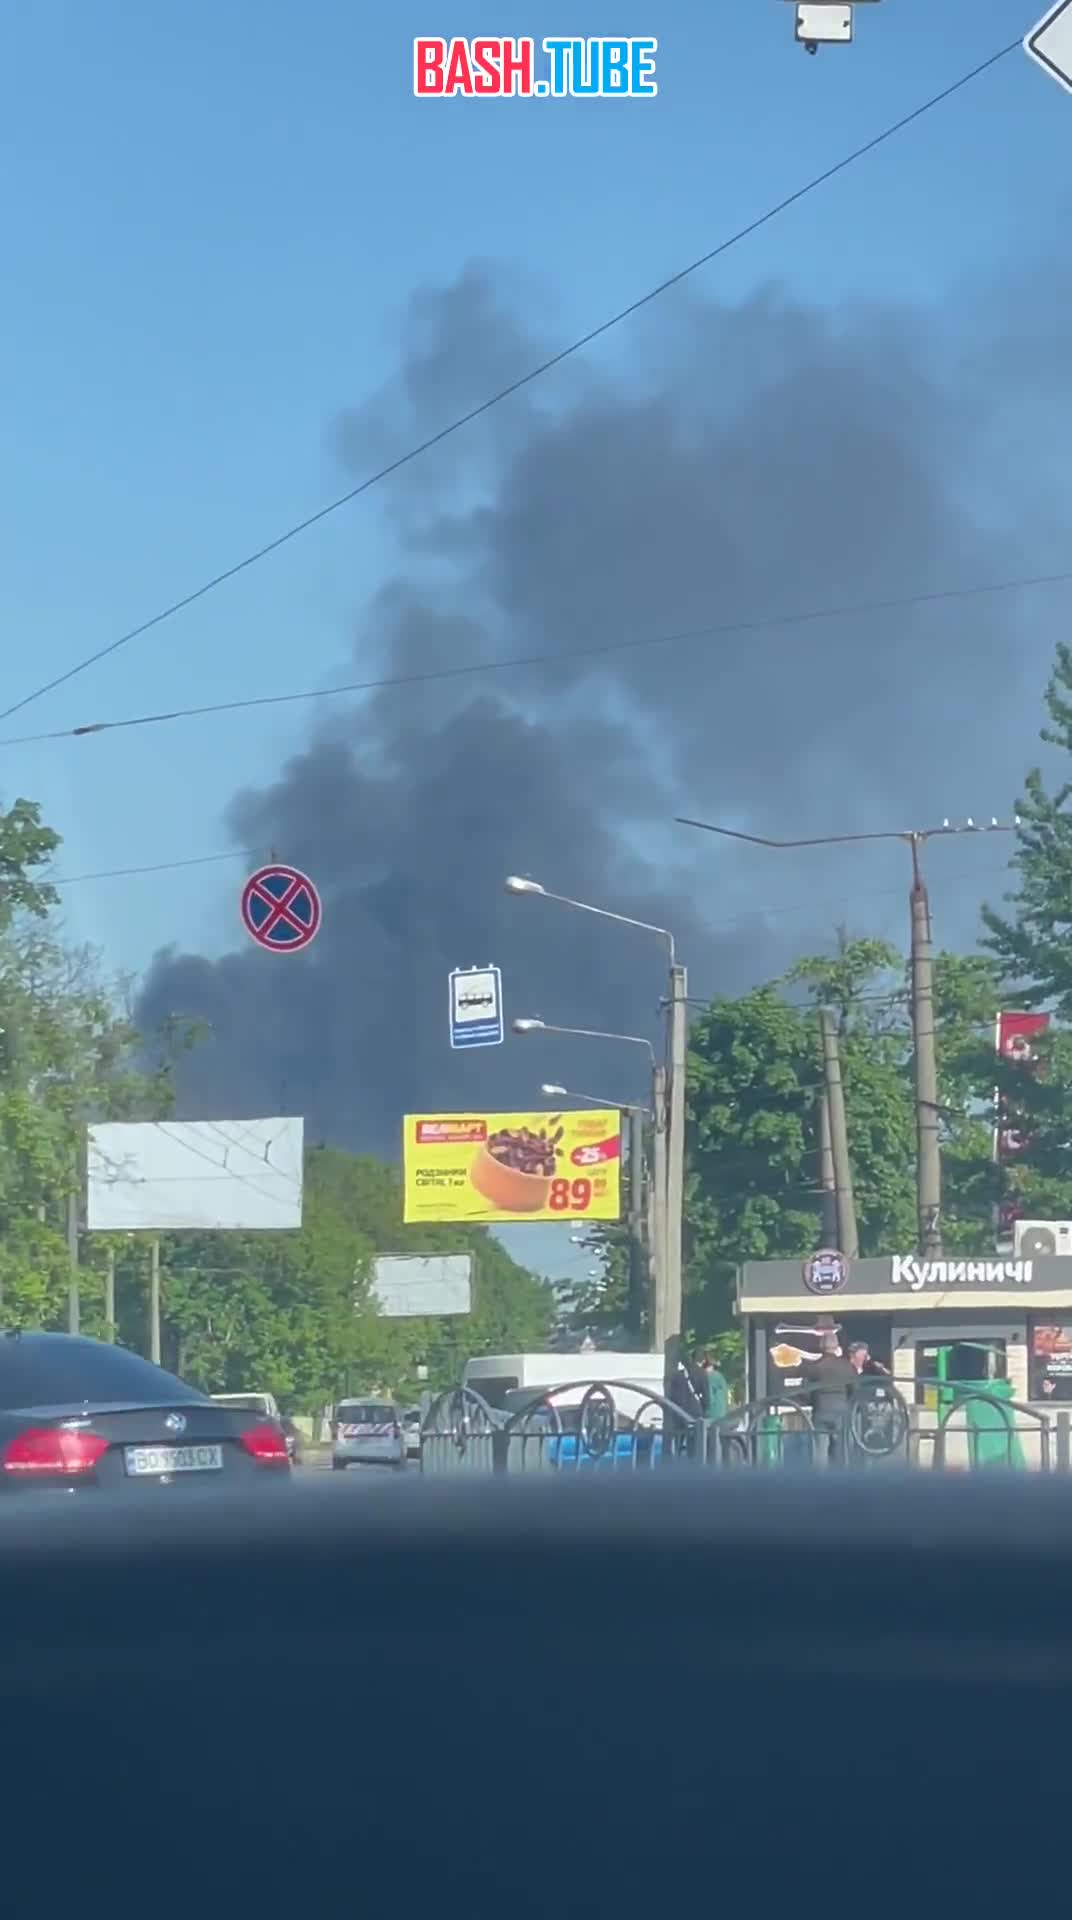  Мощный пожар начался на предприятии в Харькове